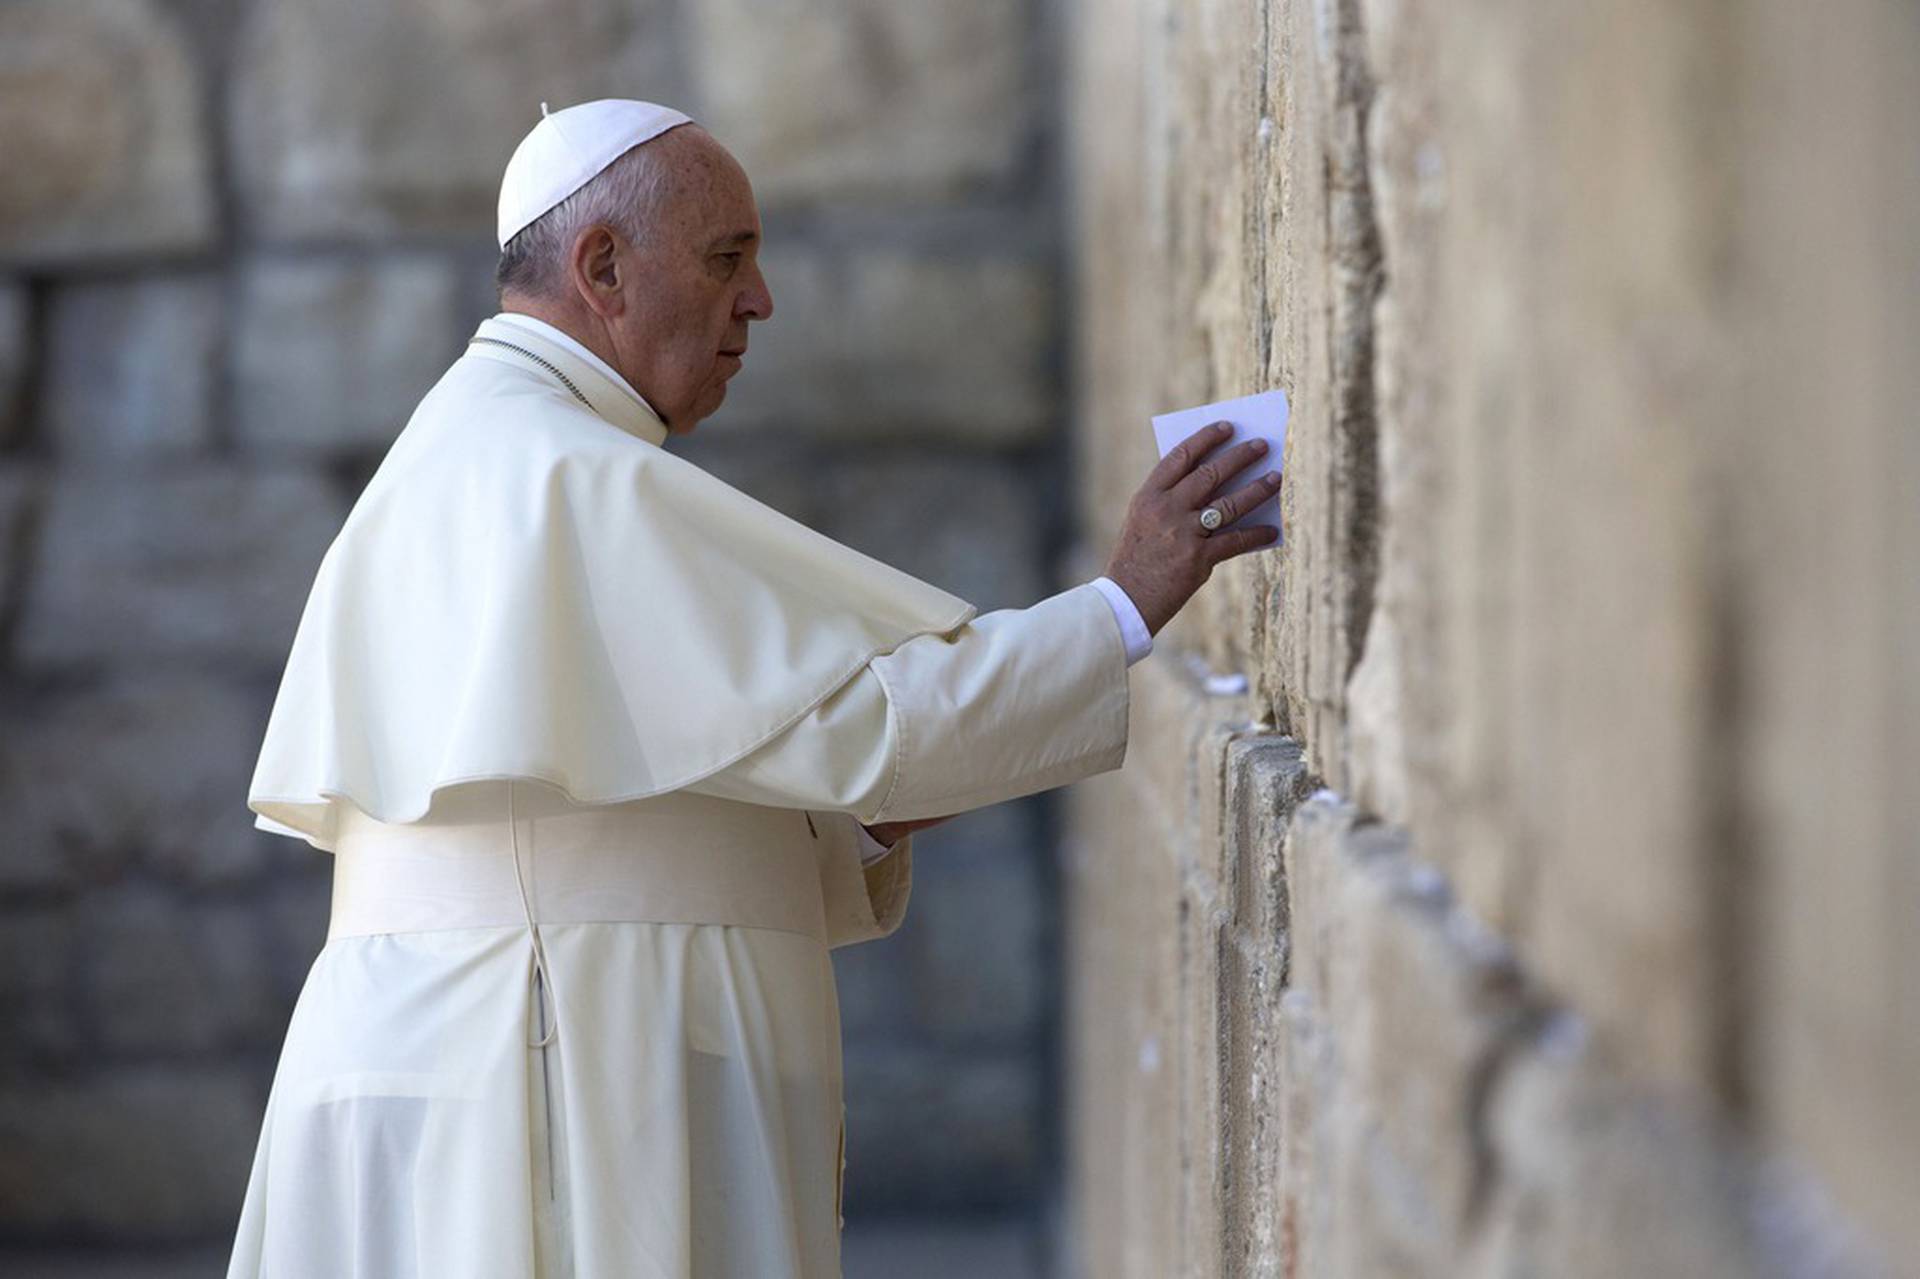 Римский еврей. Папа Римский Франциск стена плача. Папа Римский у стены плача. Папа Римский в Иерусалиме. Папа Римский в Израиле стена плача.